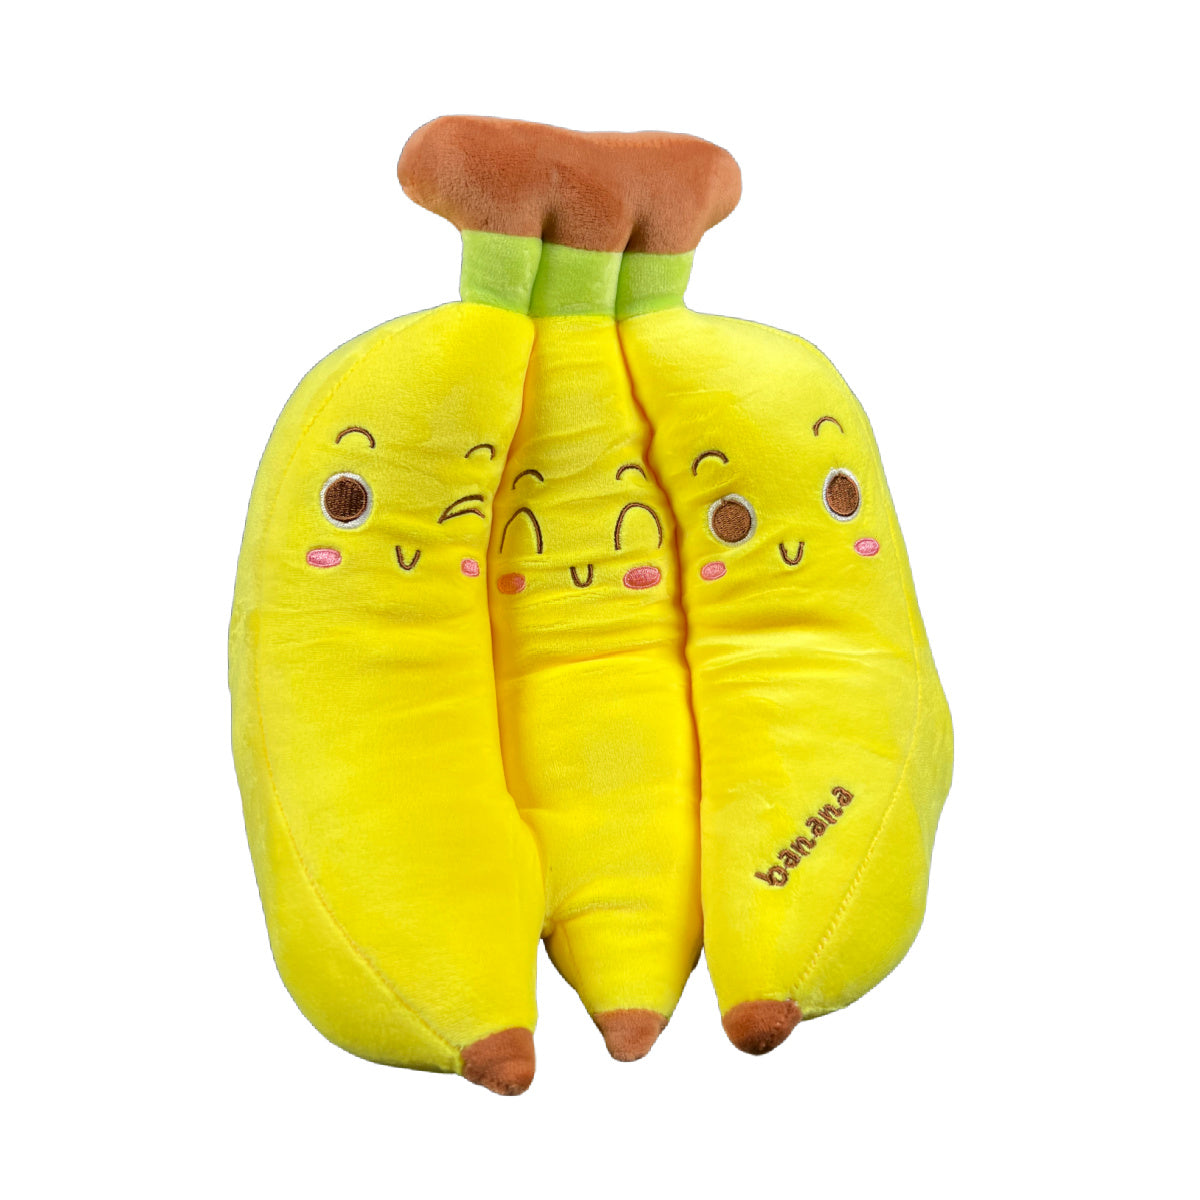 Banana Plush Toy - 13" Inch